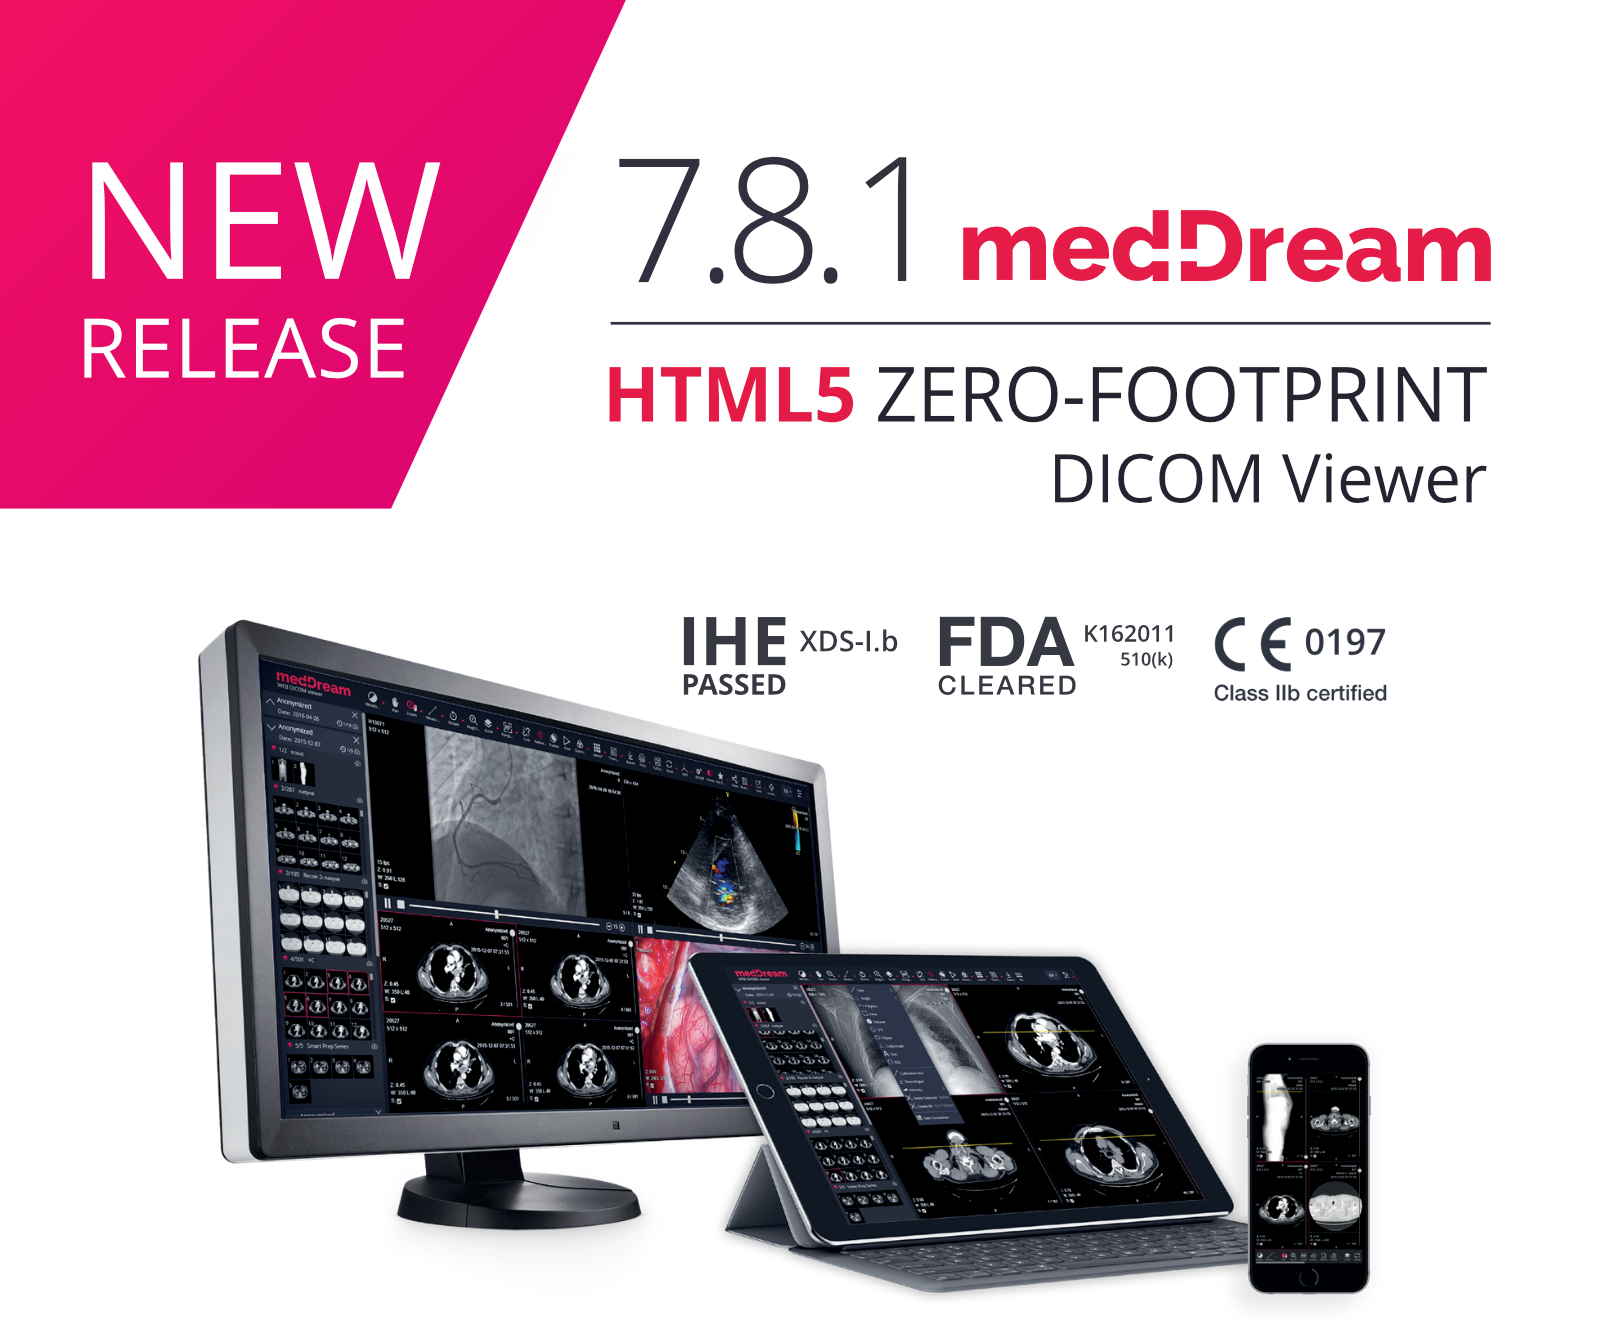 MedDream Dicom Viewer 7.8.1 Release